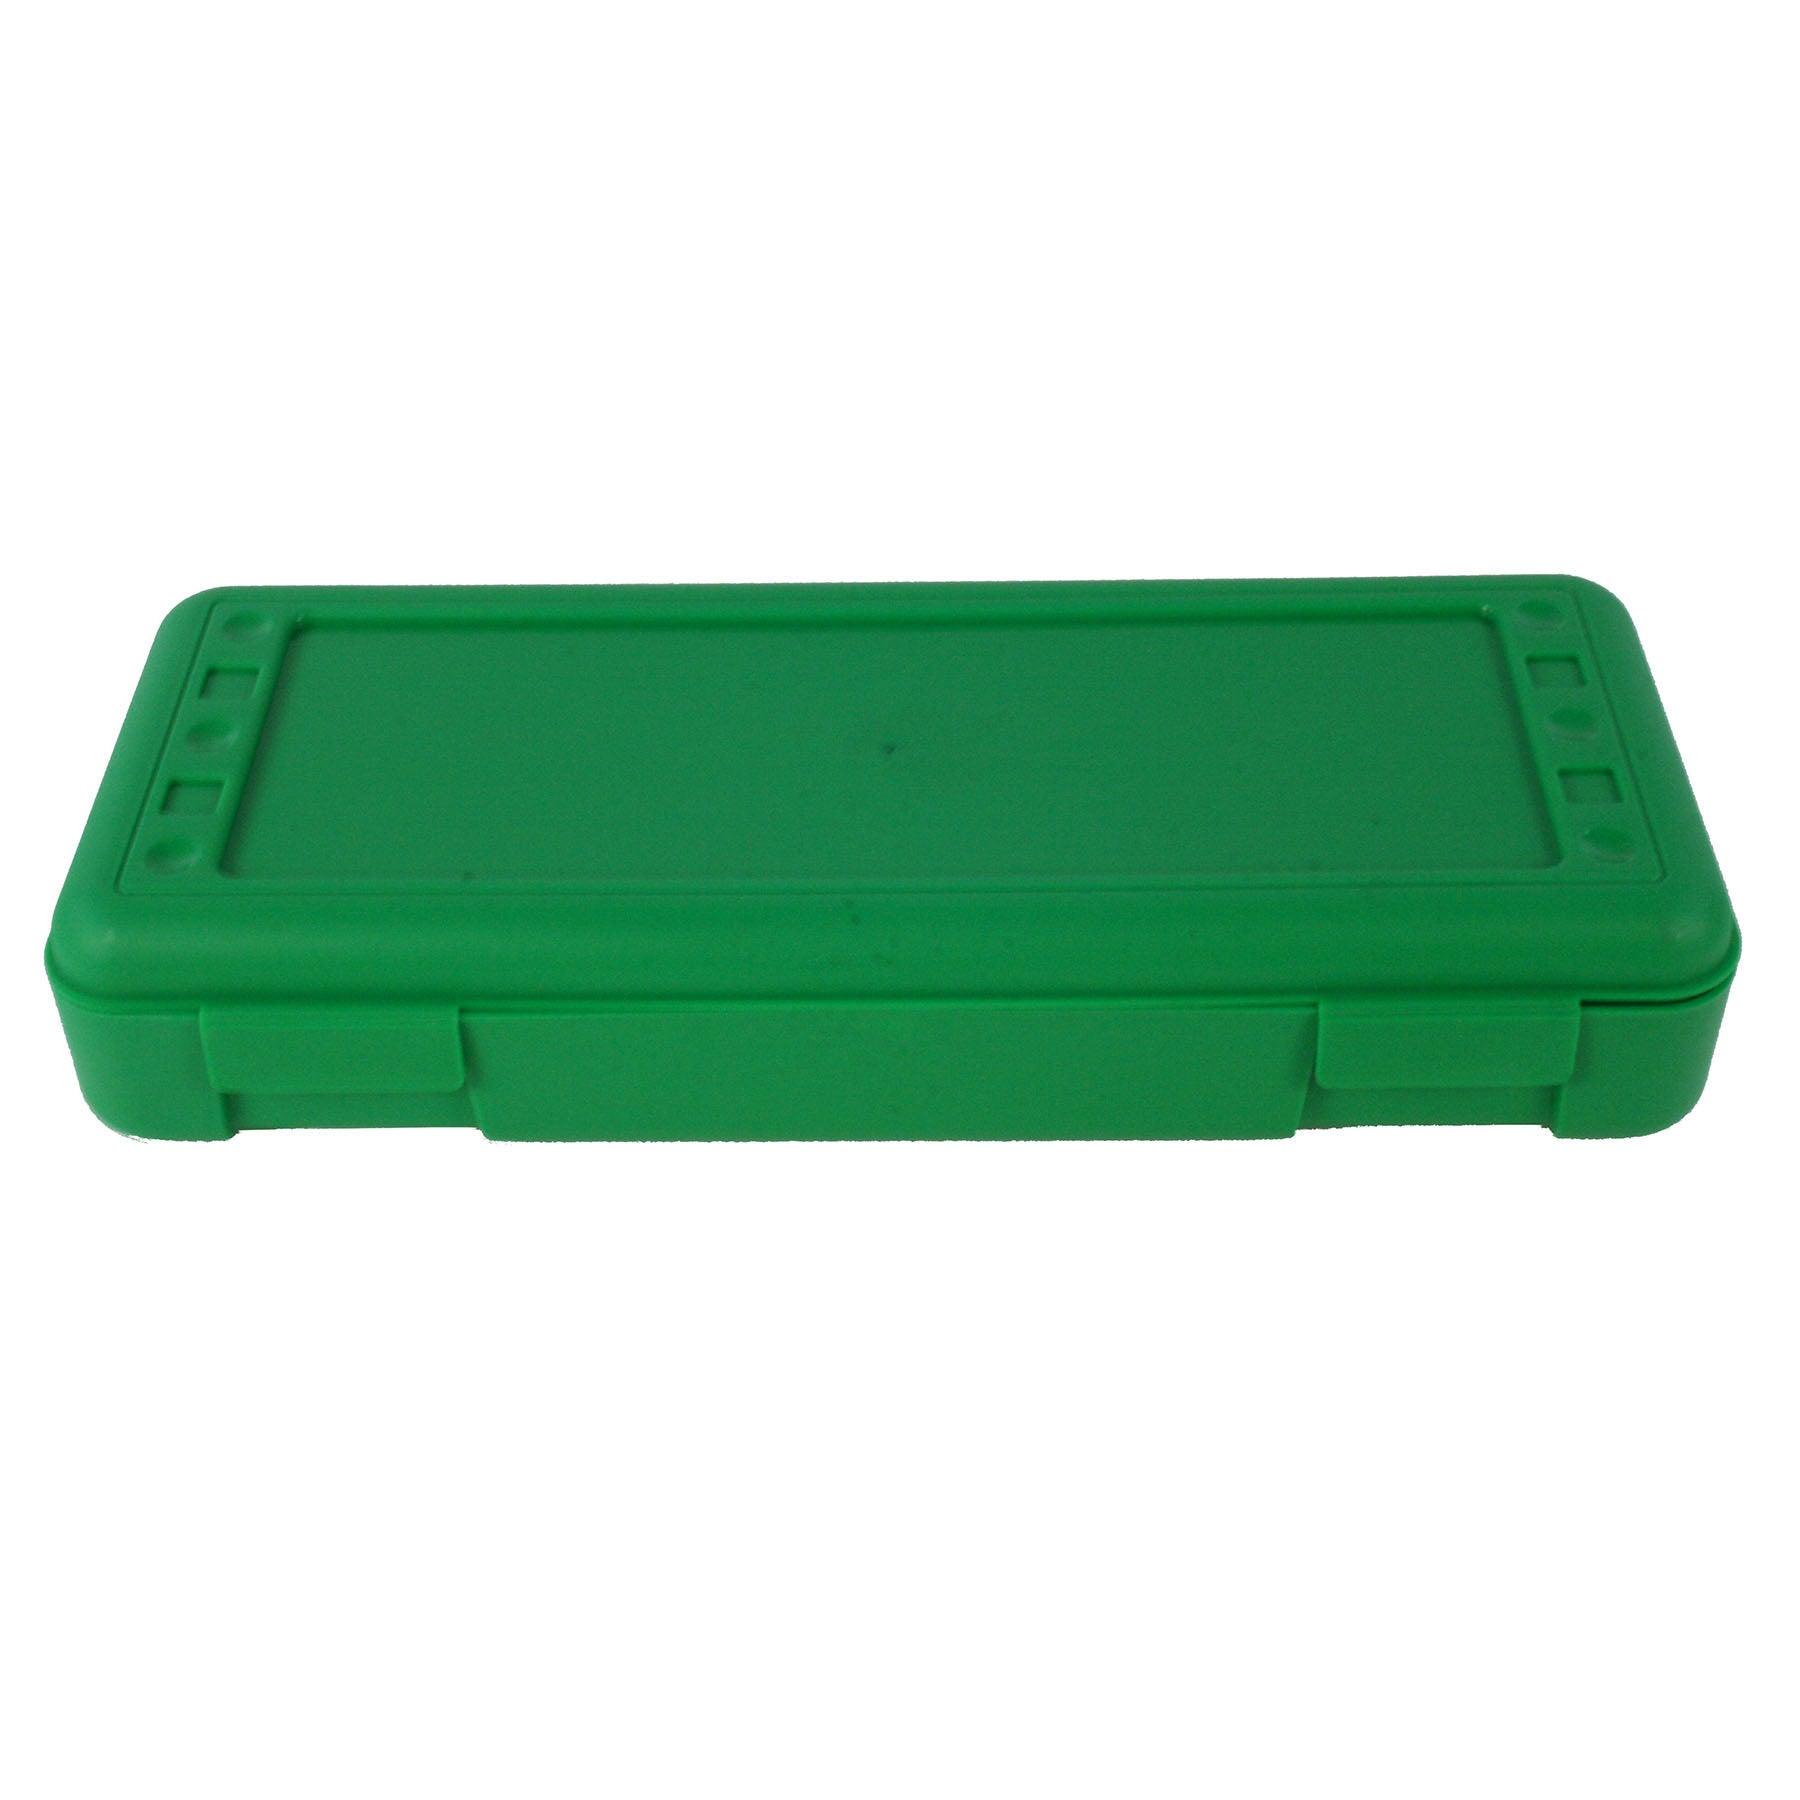 Ruler Box, Green, Pack of 3 - Loomini